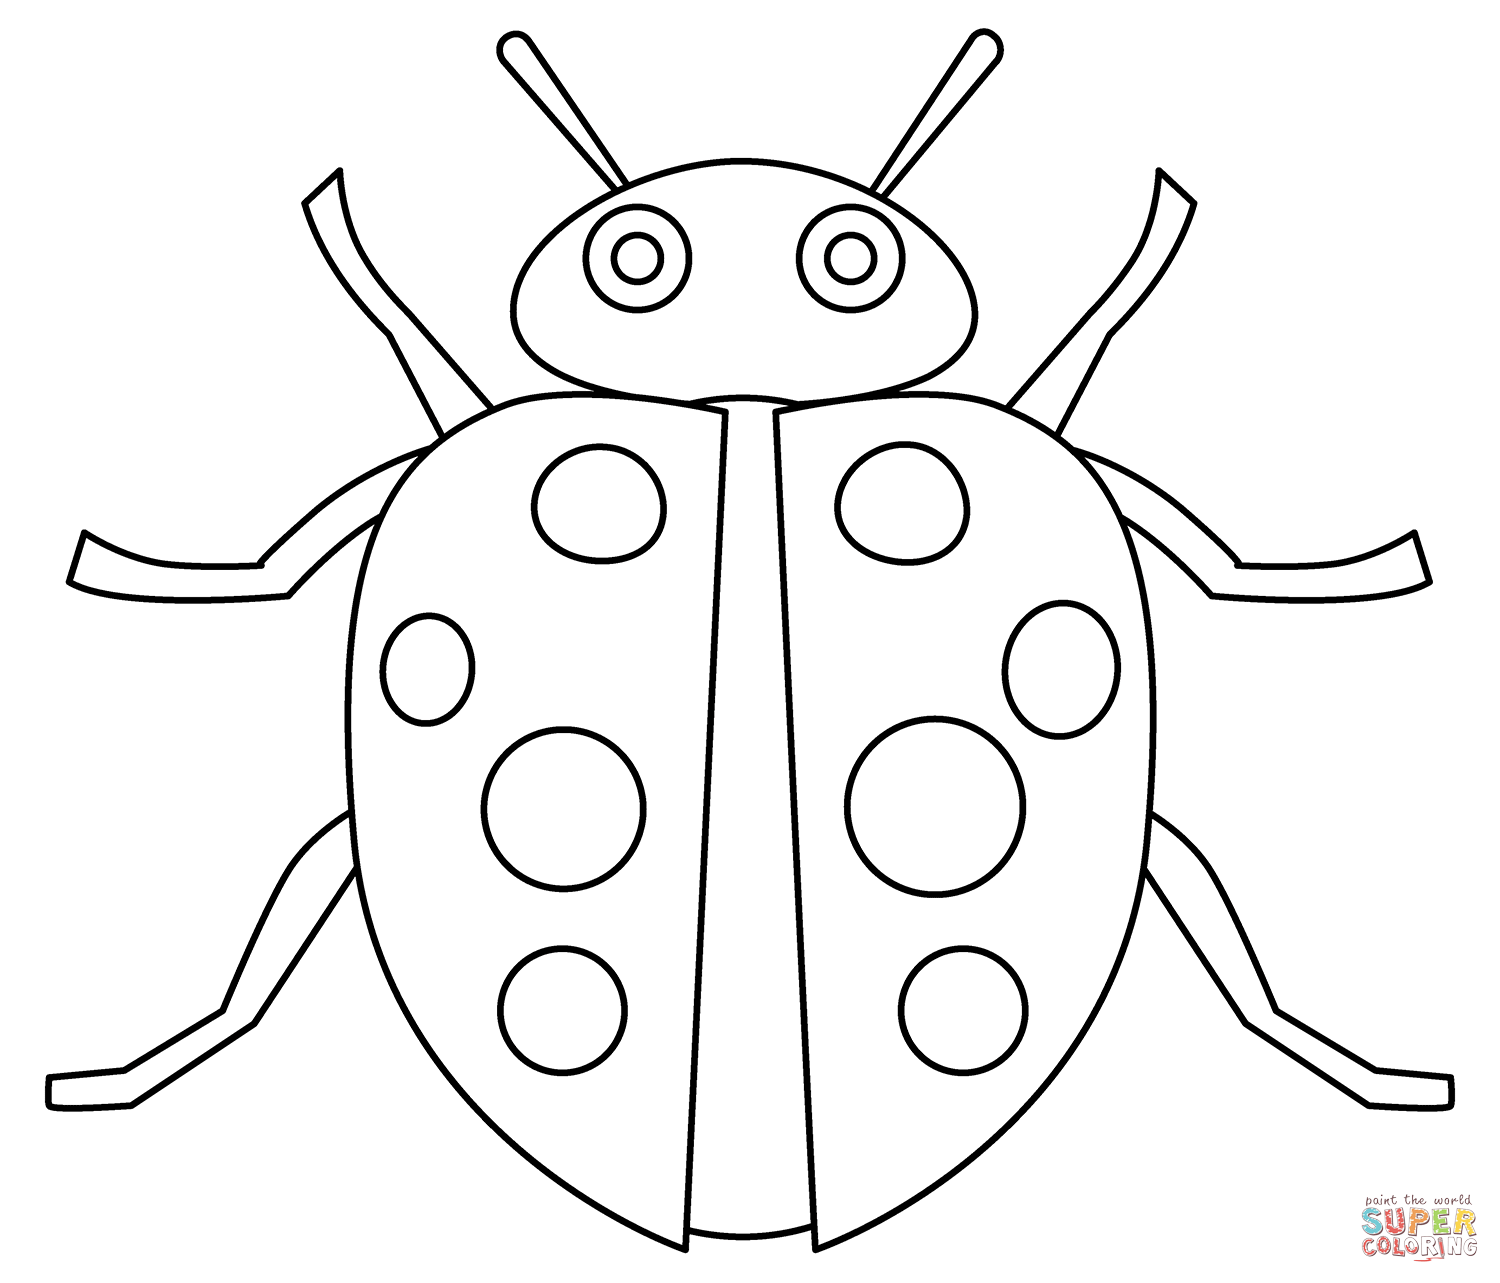 Lady beetle emoji coloring page free printable coloring pages